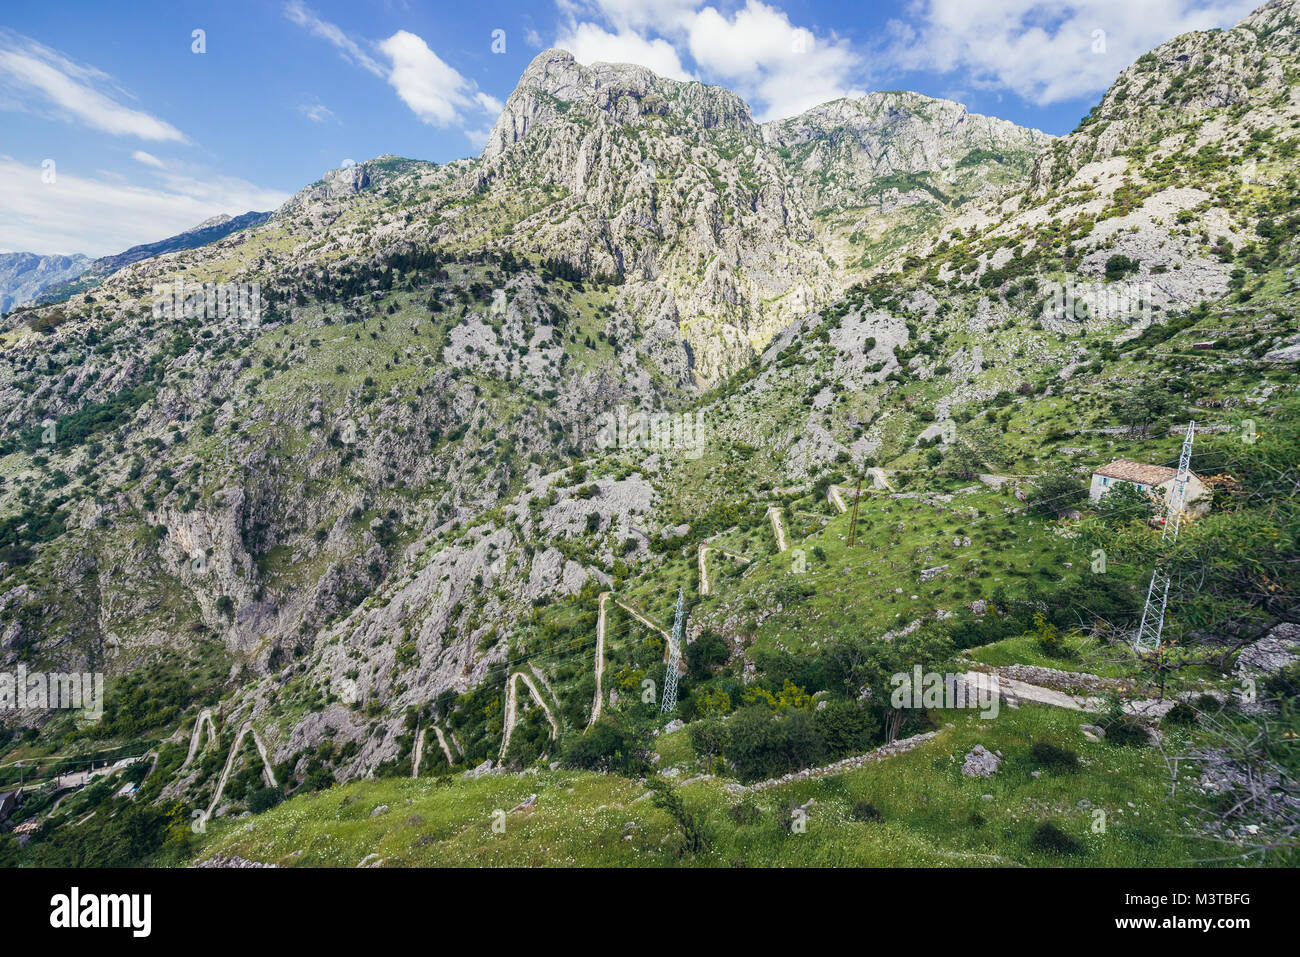 Zigzag footpath from Kotor coastal city, located in Bay of Kotor throug mountain to Zanjev Do village in Montenegro Stock Photo